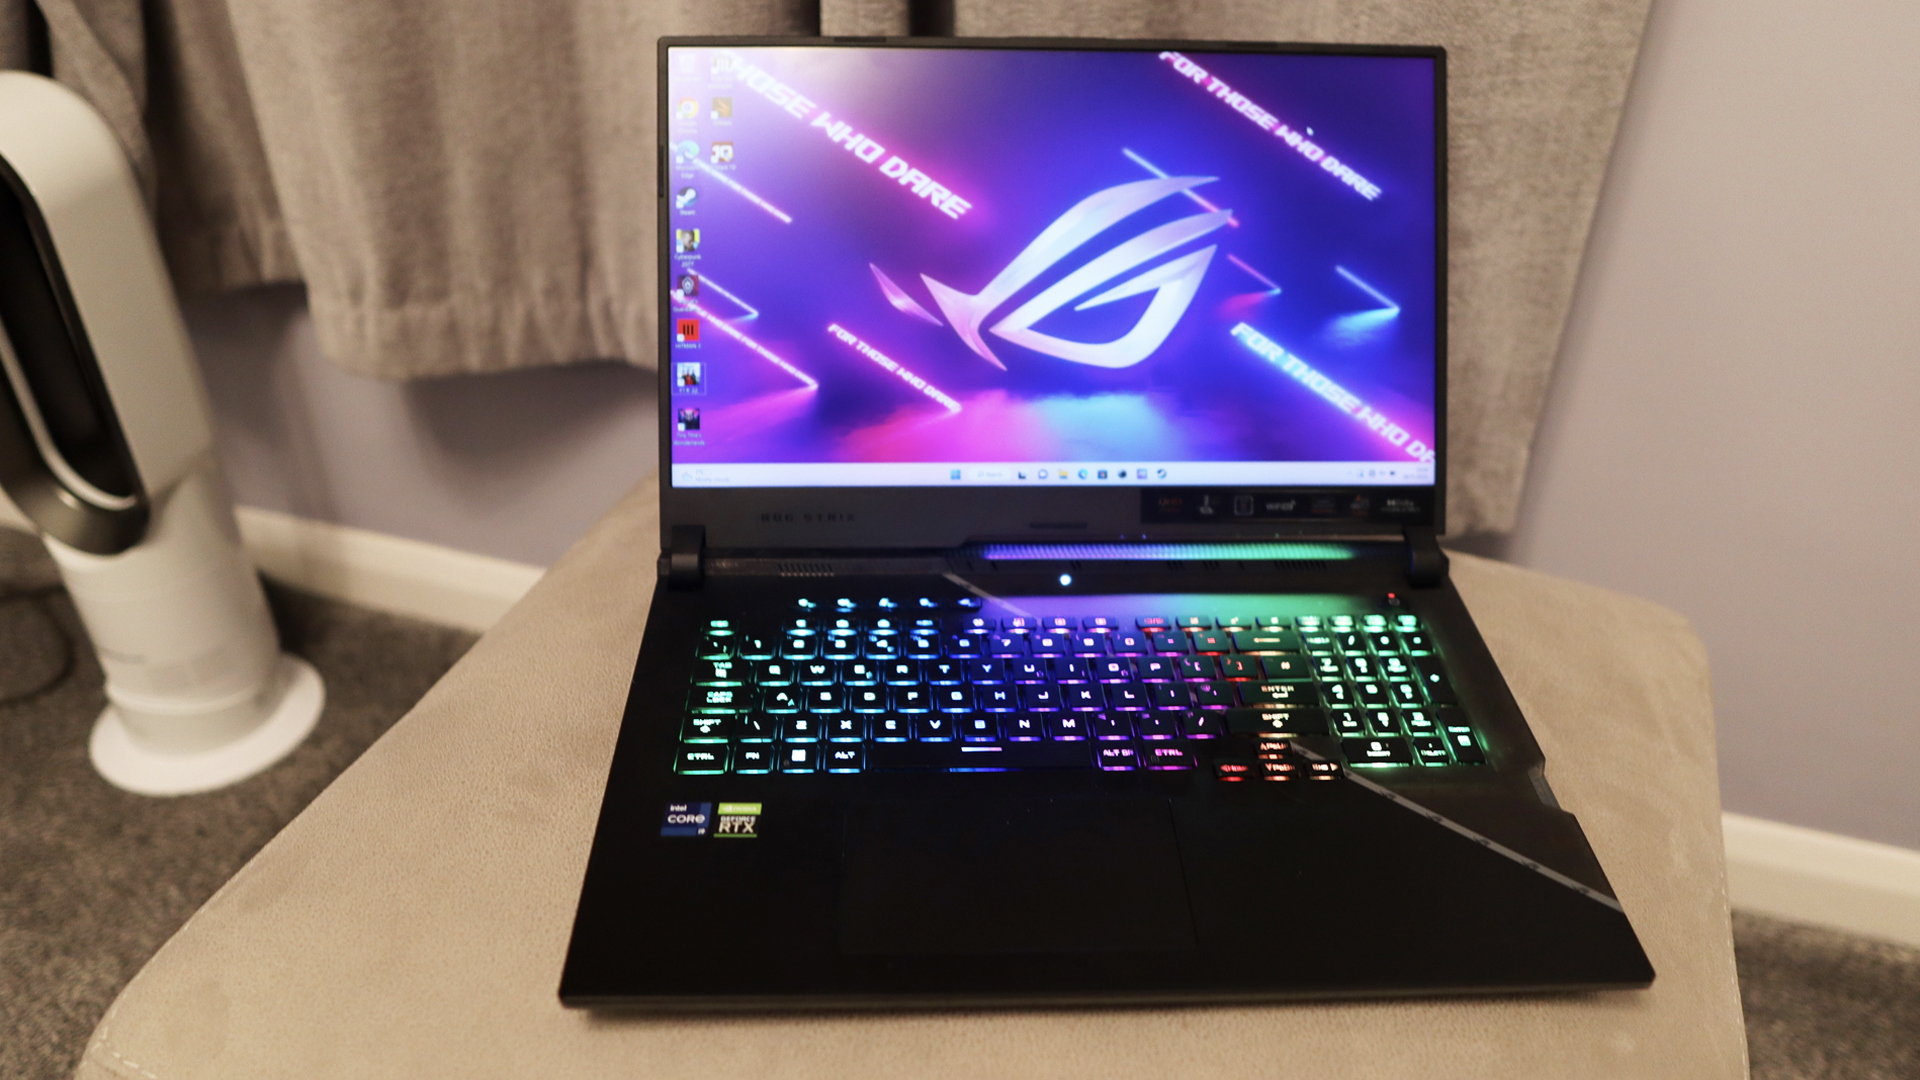 Asus ROG Strix Scar 17 review: Gaming laptop on beige stand, RGB keyboard glows